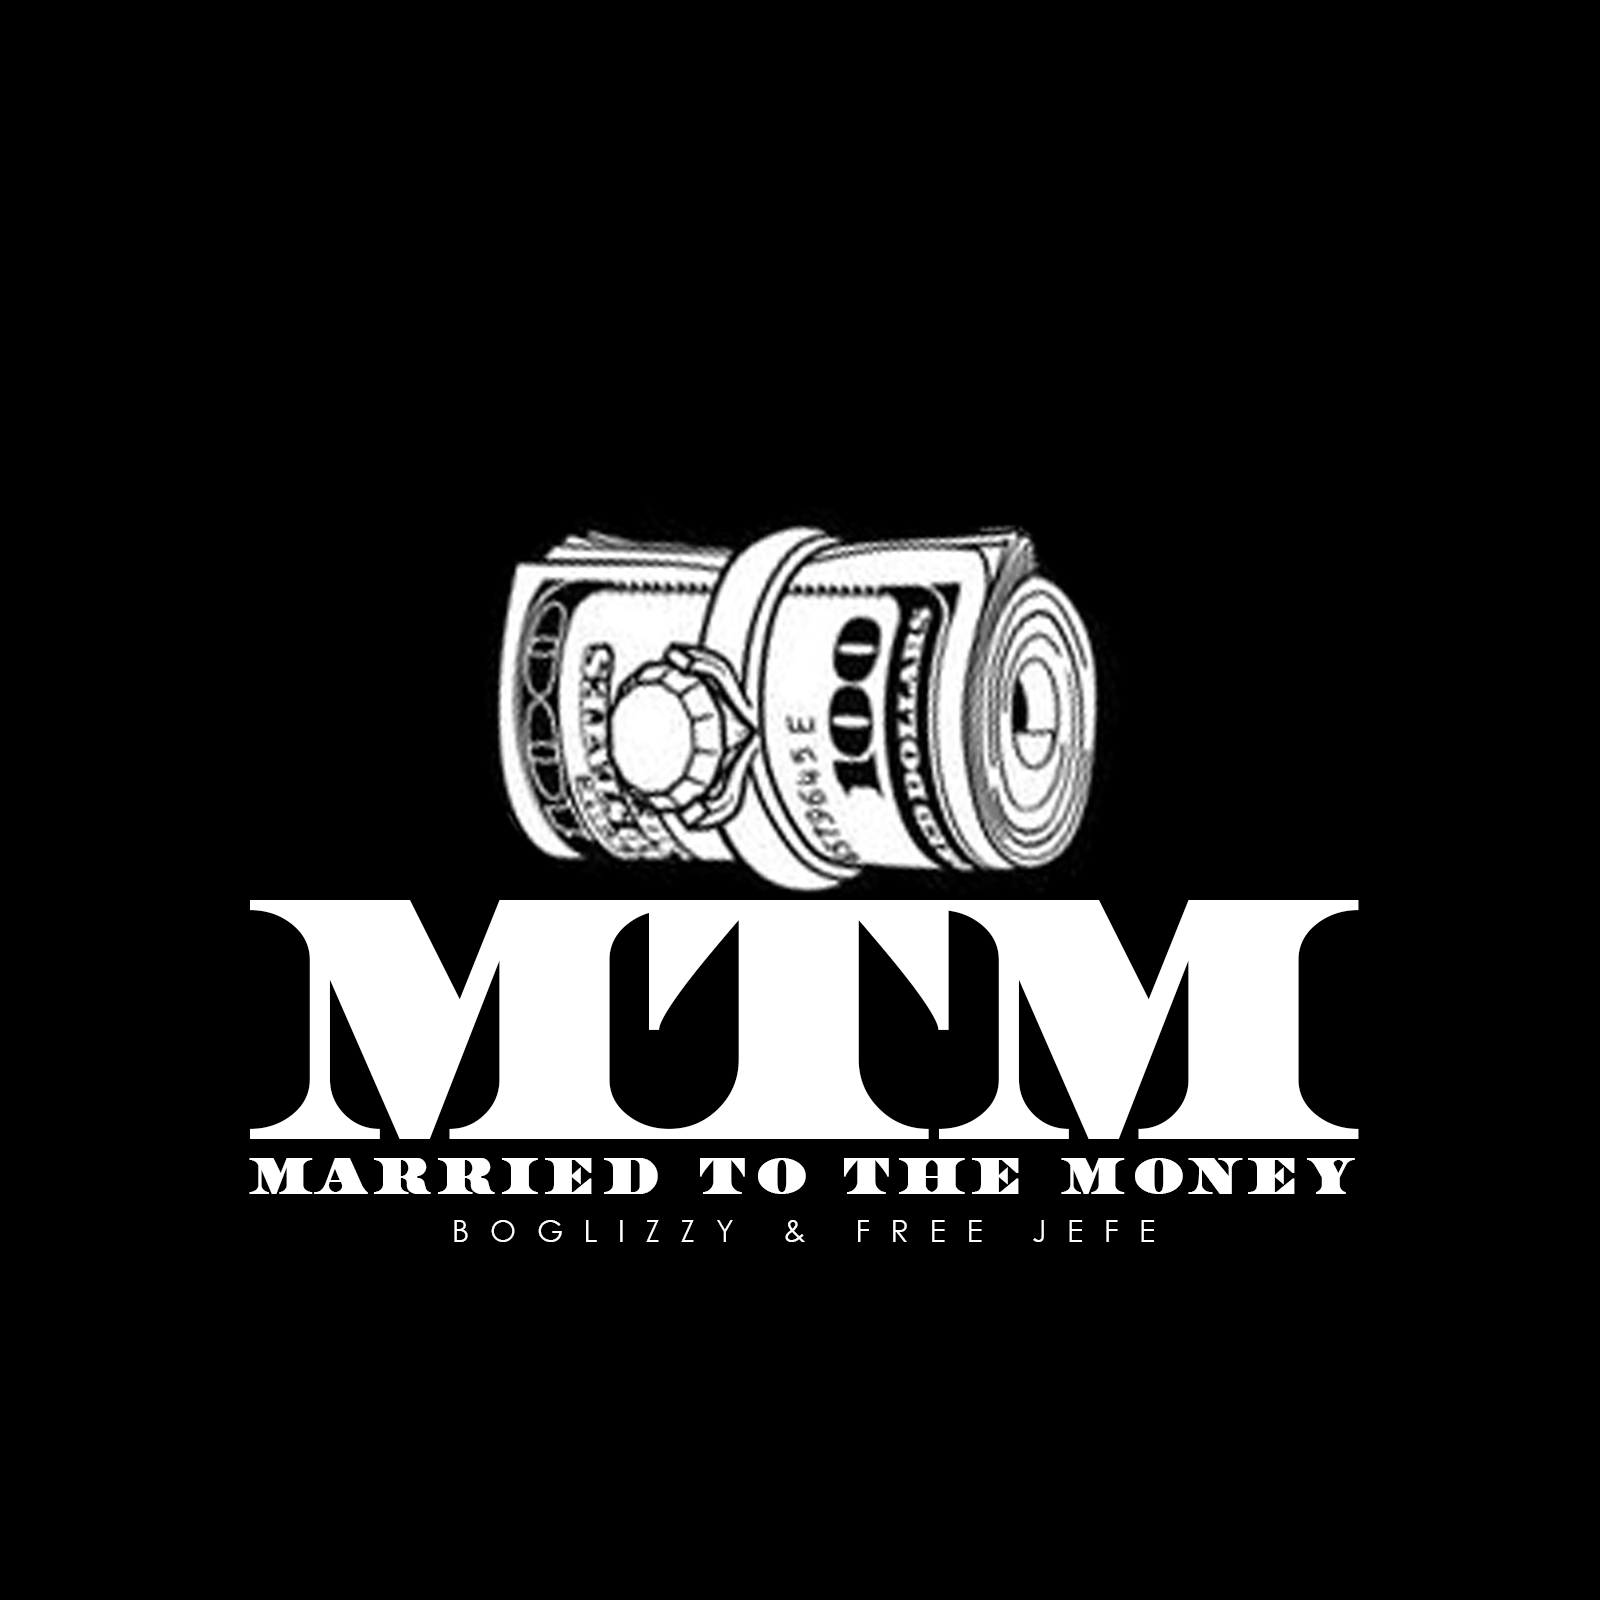 Get Money Logo - Money Logo Design. banking and finance logo design layout with money ...